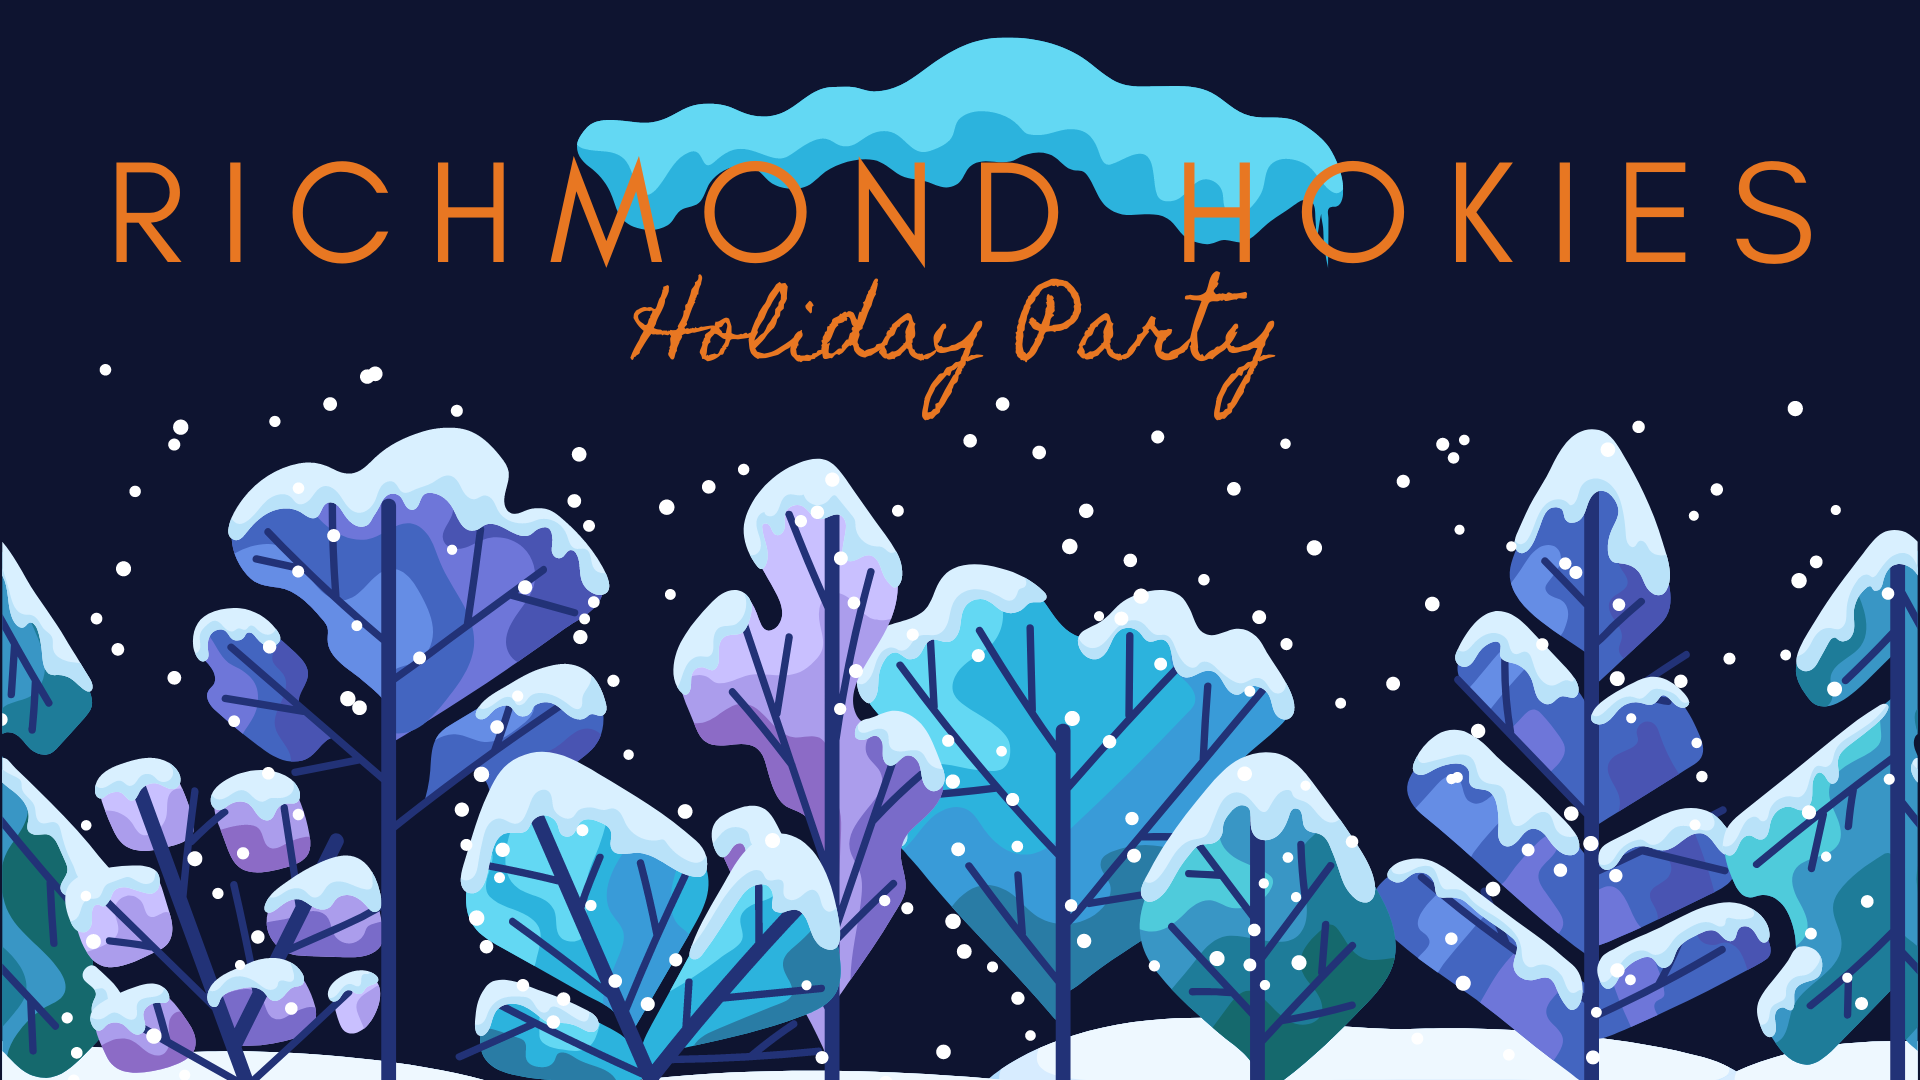 Richmond Hokies Holiday Party